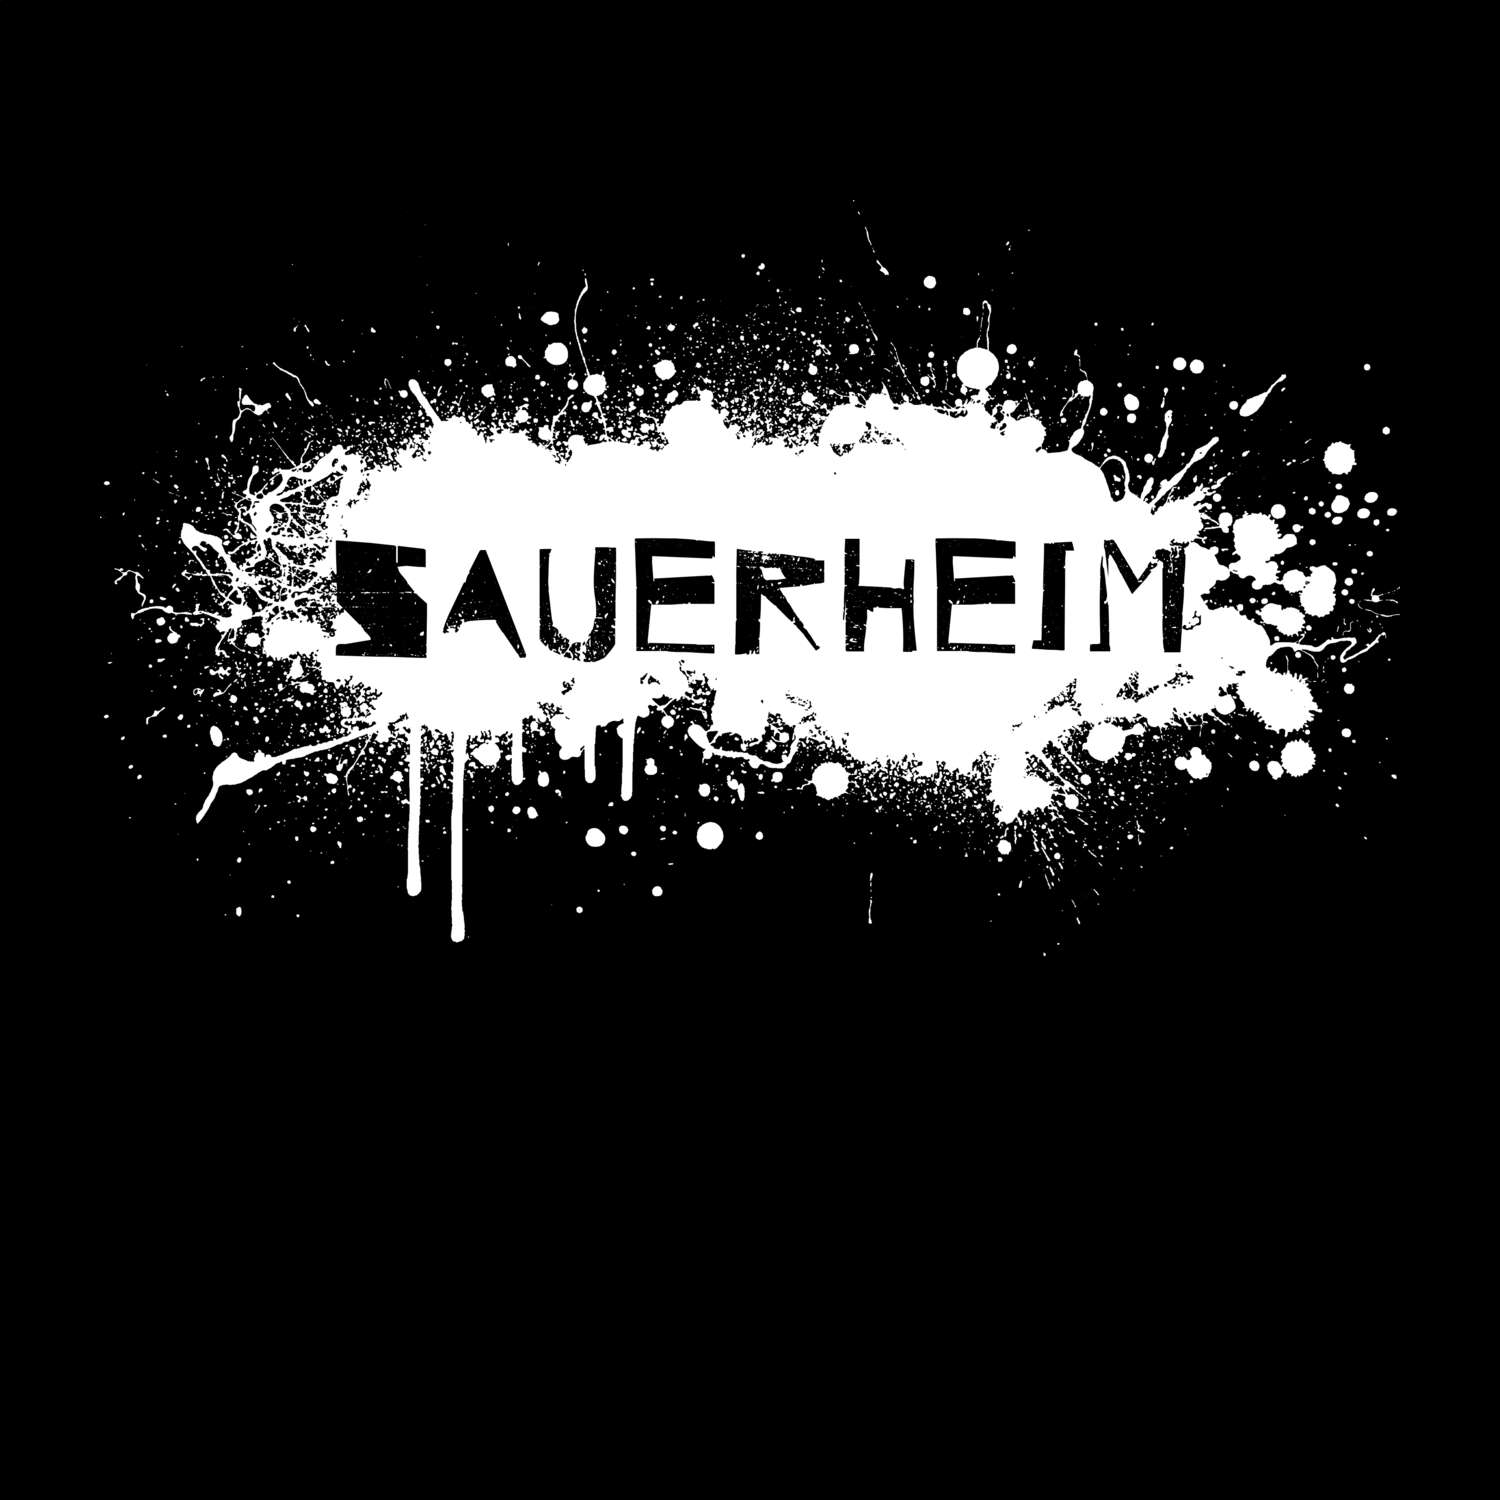 Sauerheim T-Shirt »Paint Splash Punk«